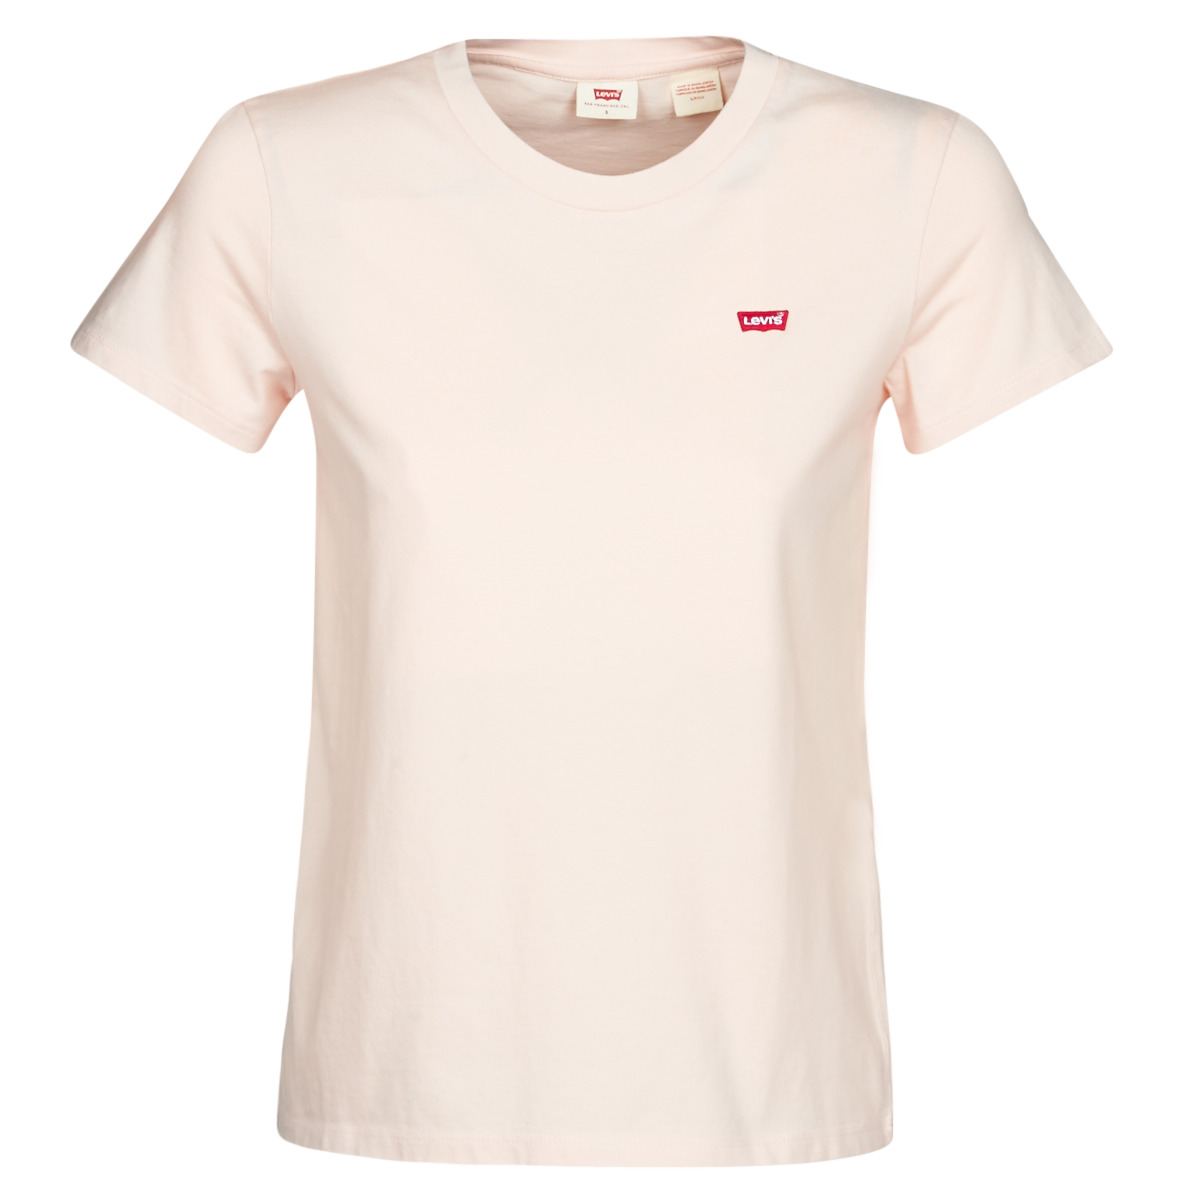 textil Dame T-shirts m. korte ærmer Levi's PERFECT TEE Pink